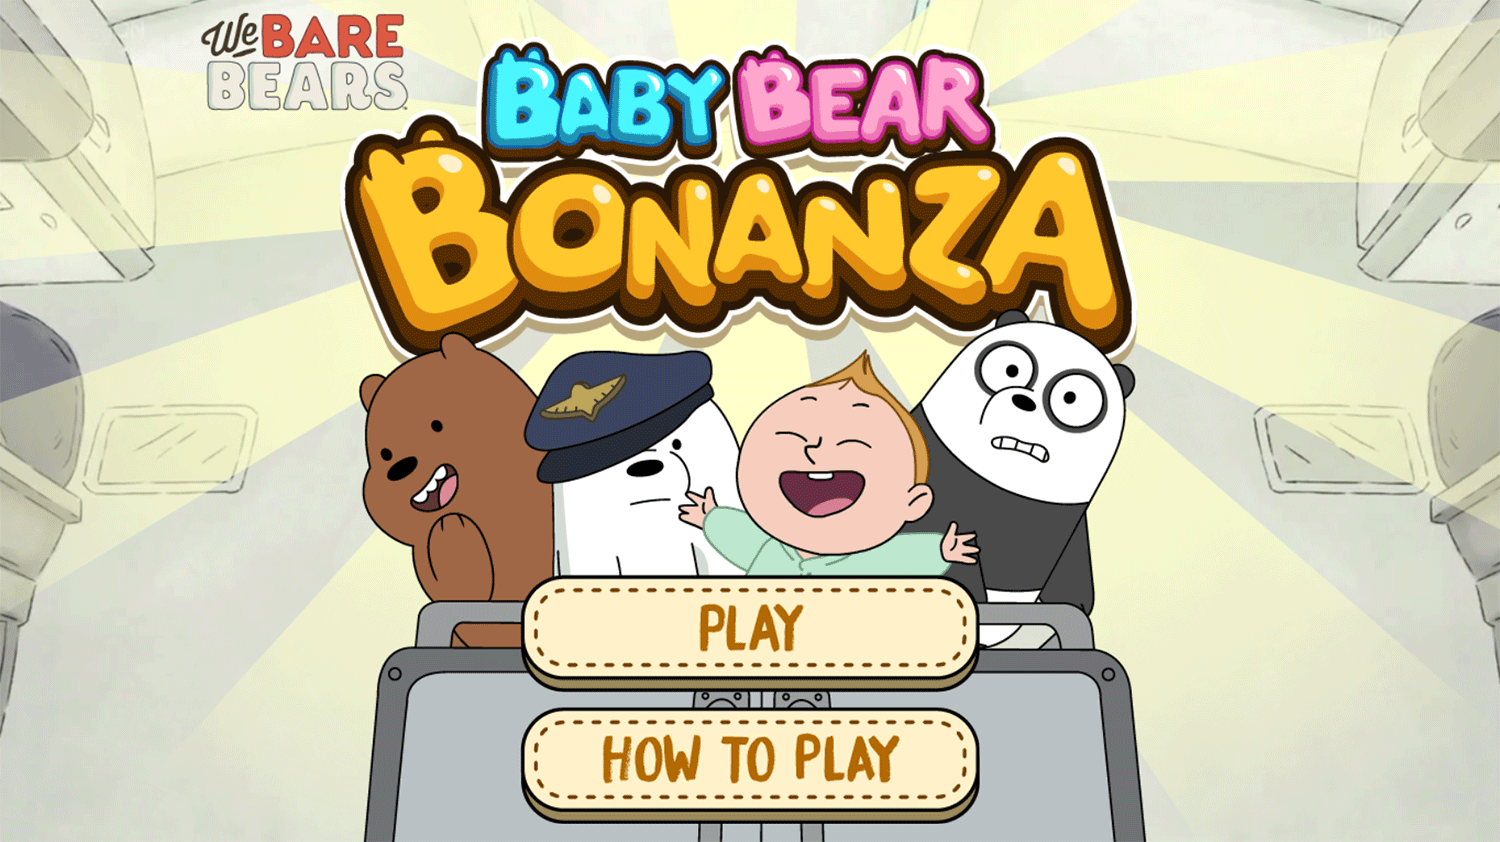 We Bare Bears Baby Bear Bonanza Welcome Screen Screenshot.